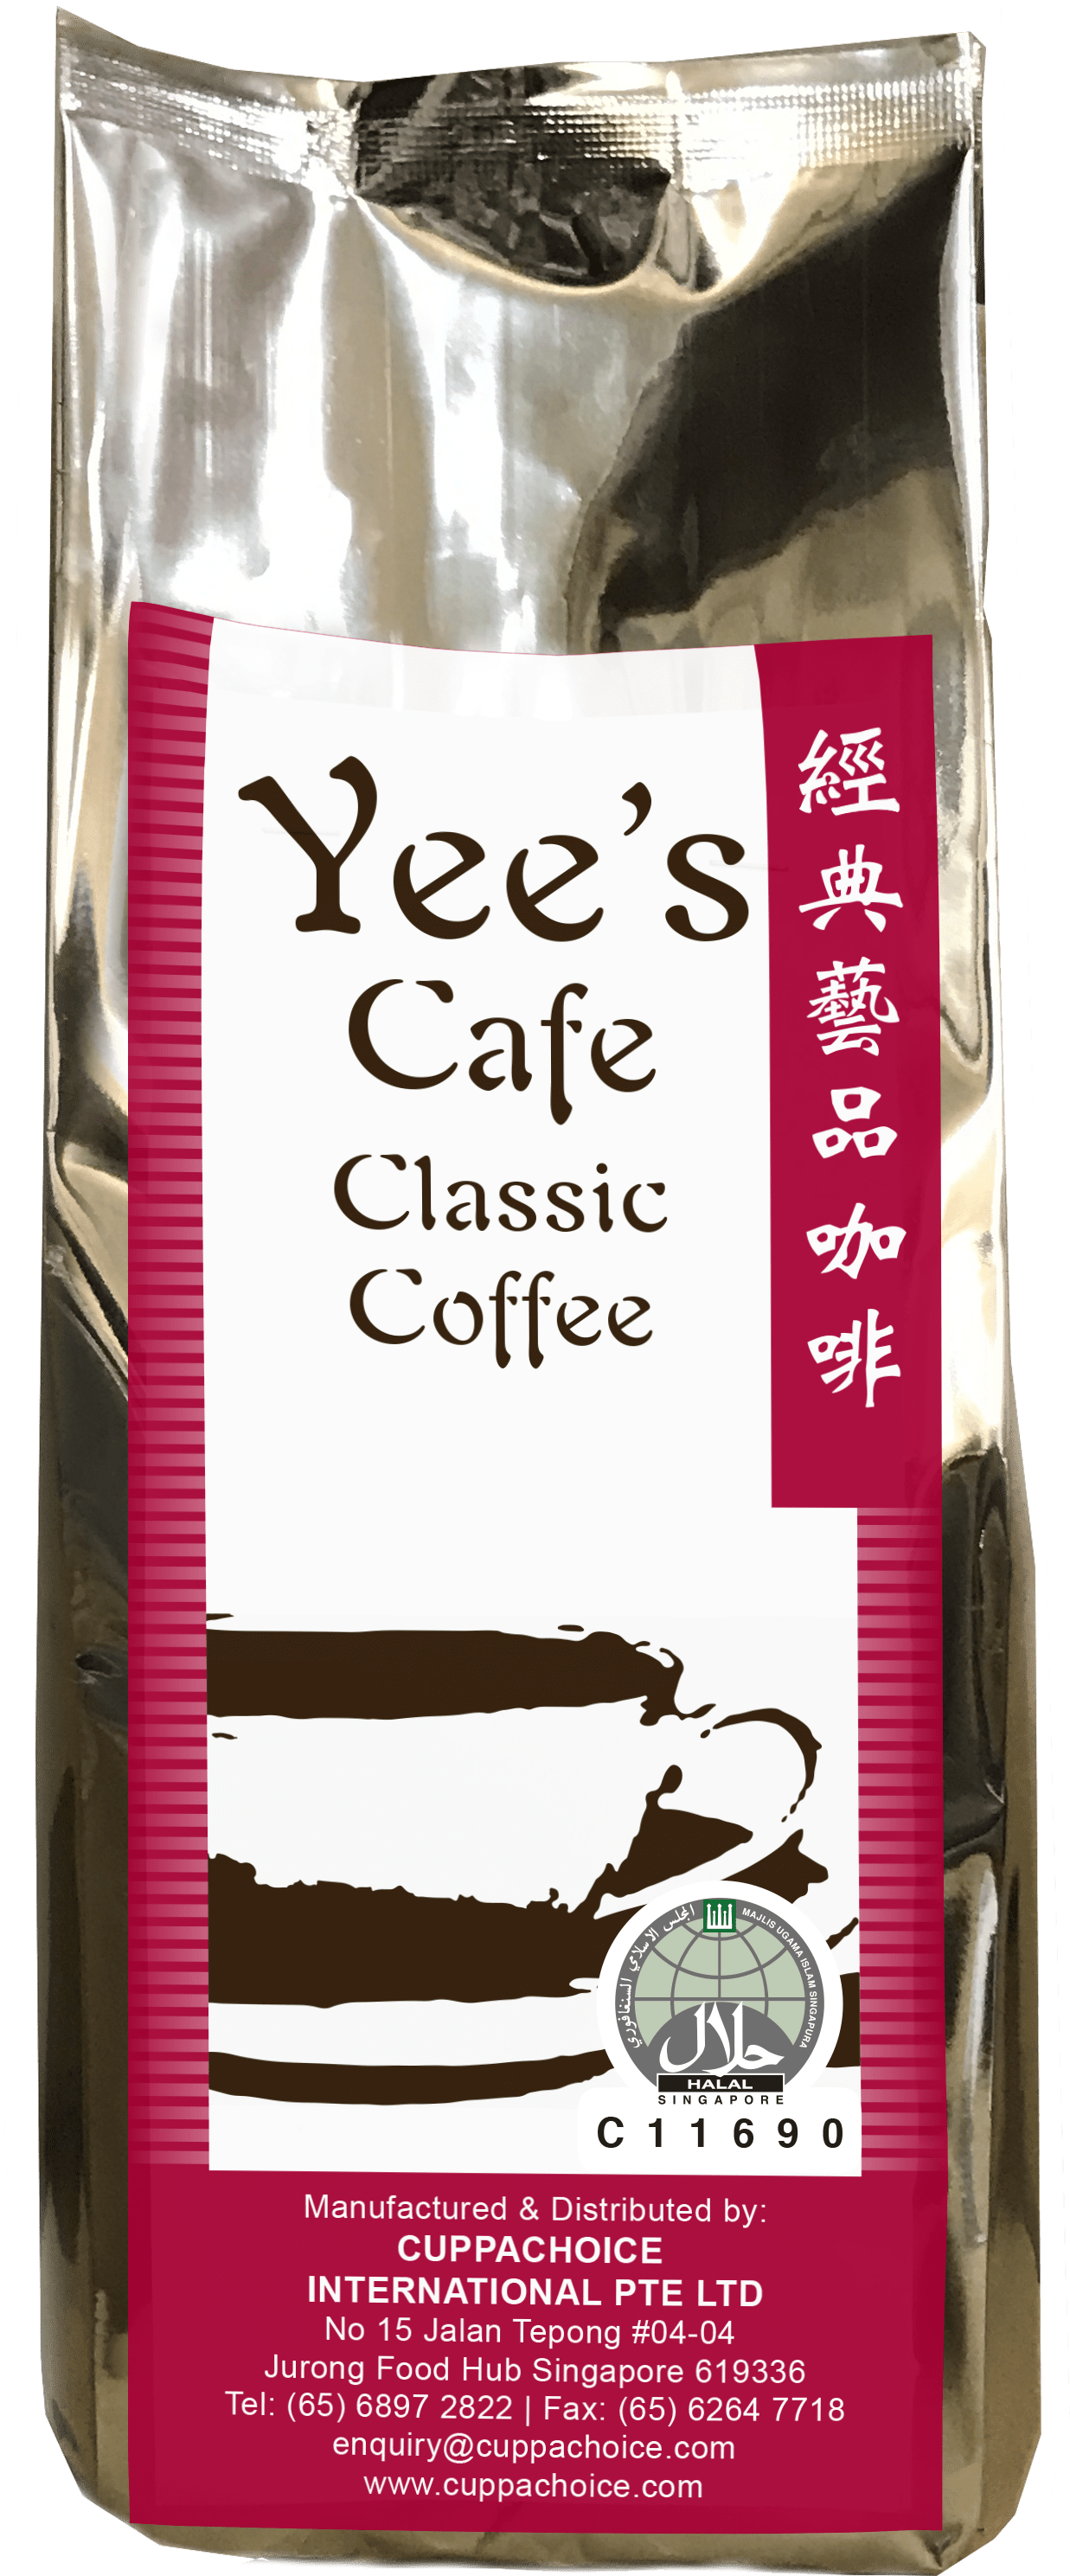 YEE'S CAFE CLASSIC COFFEE